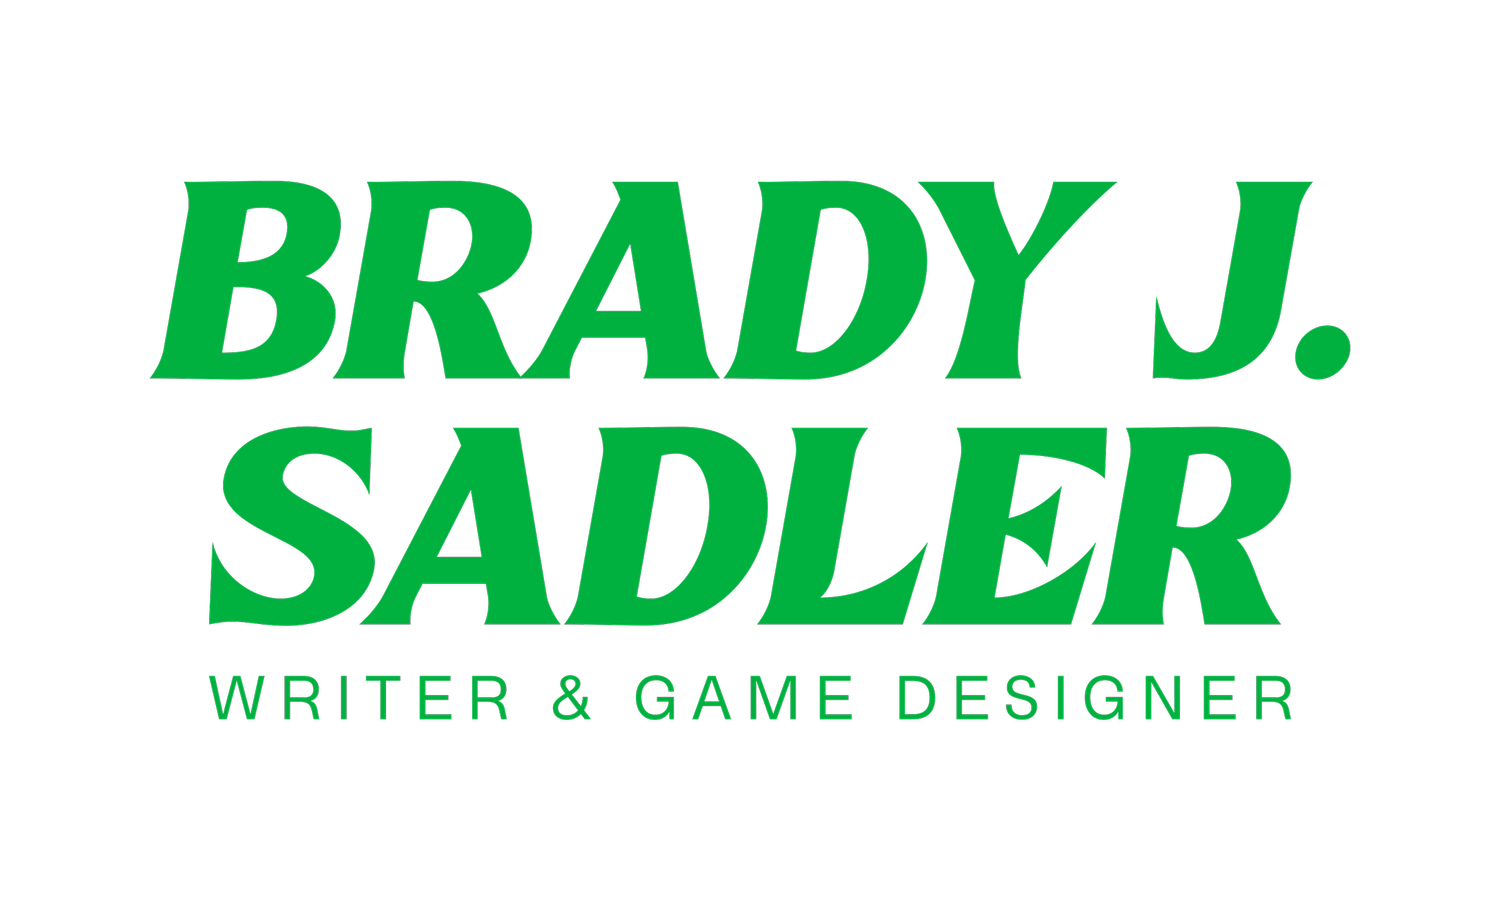 Brady J. Sadler